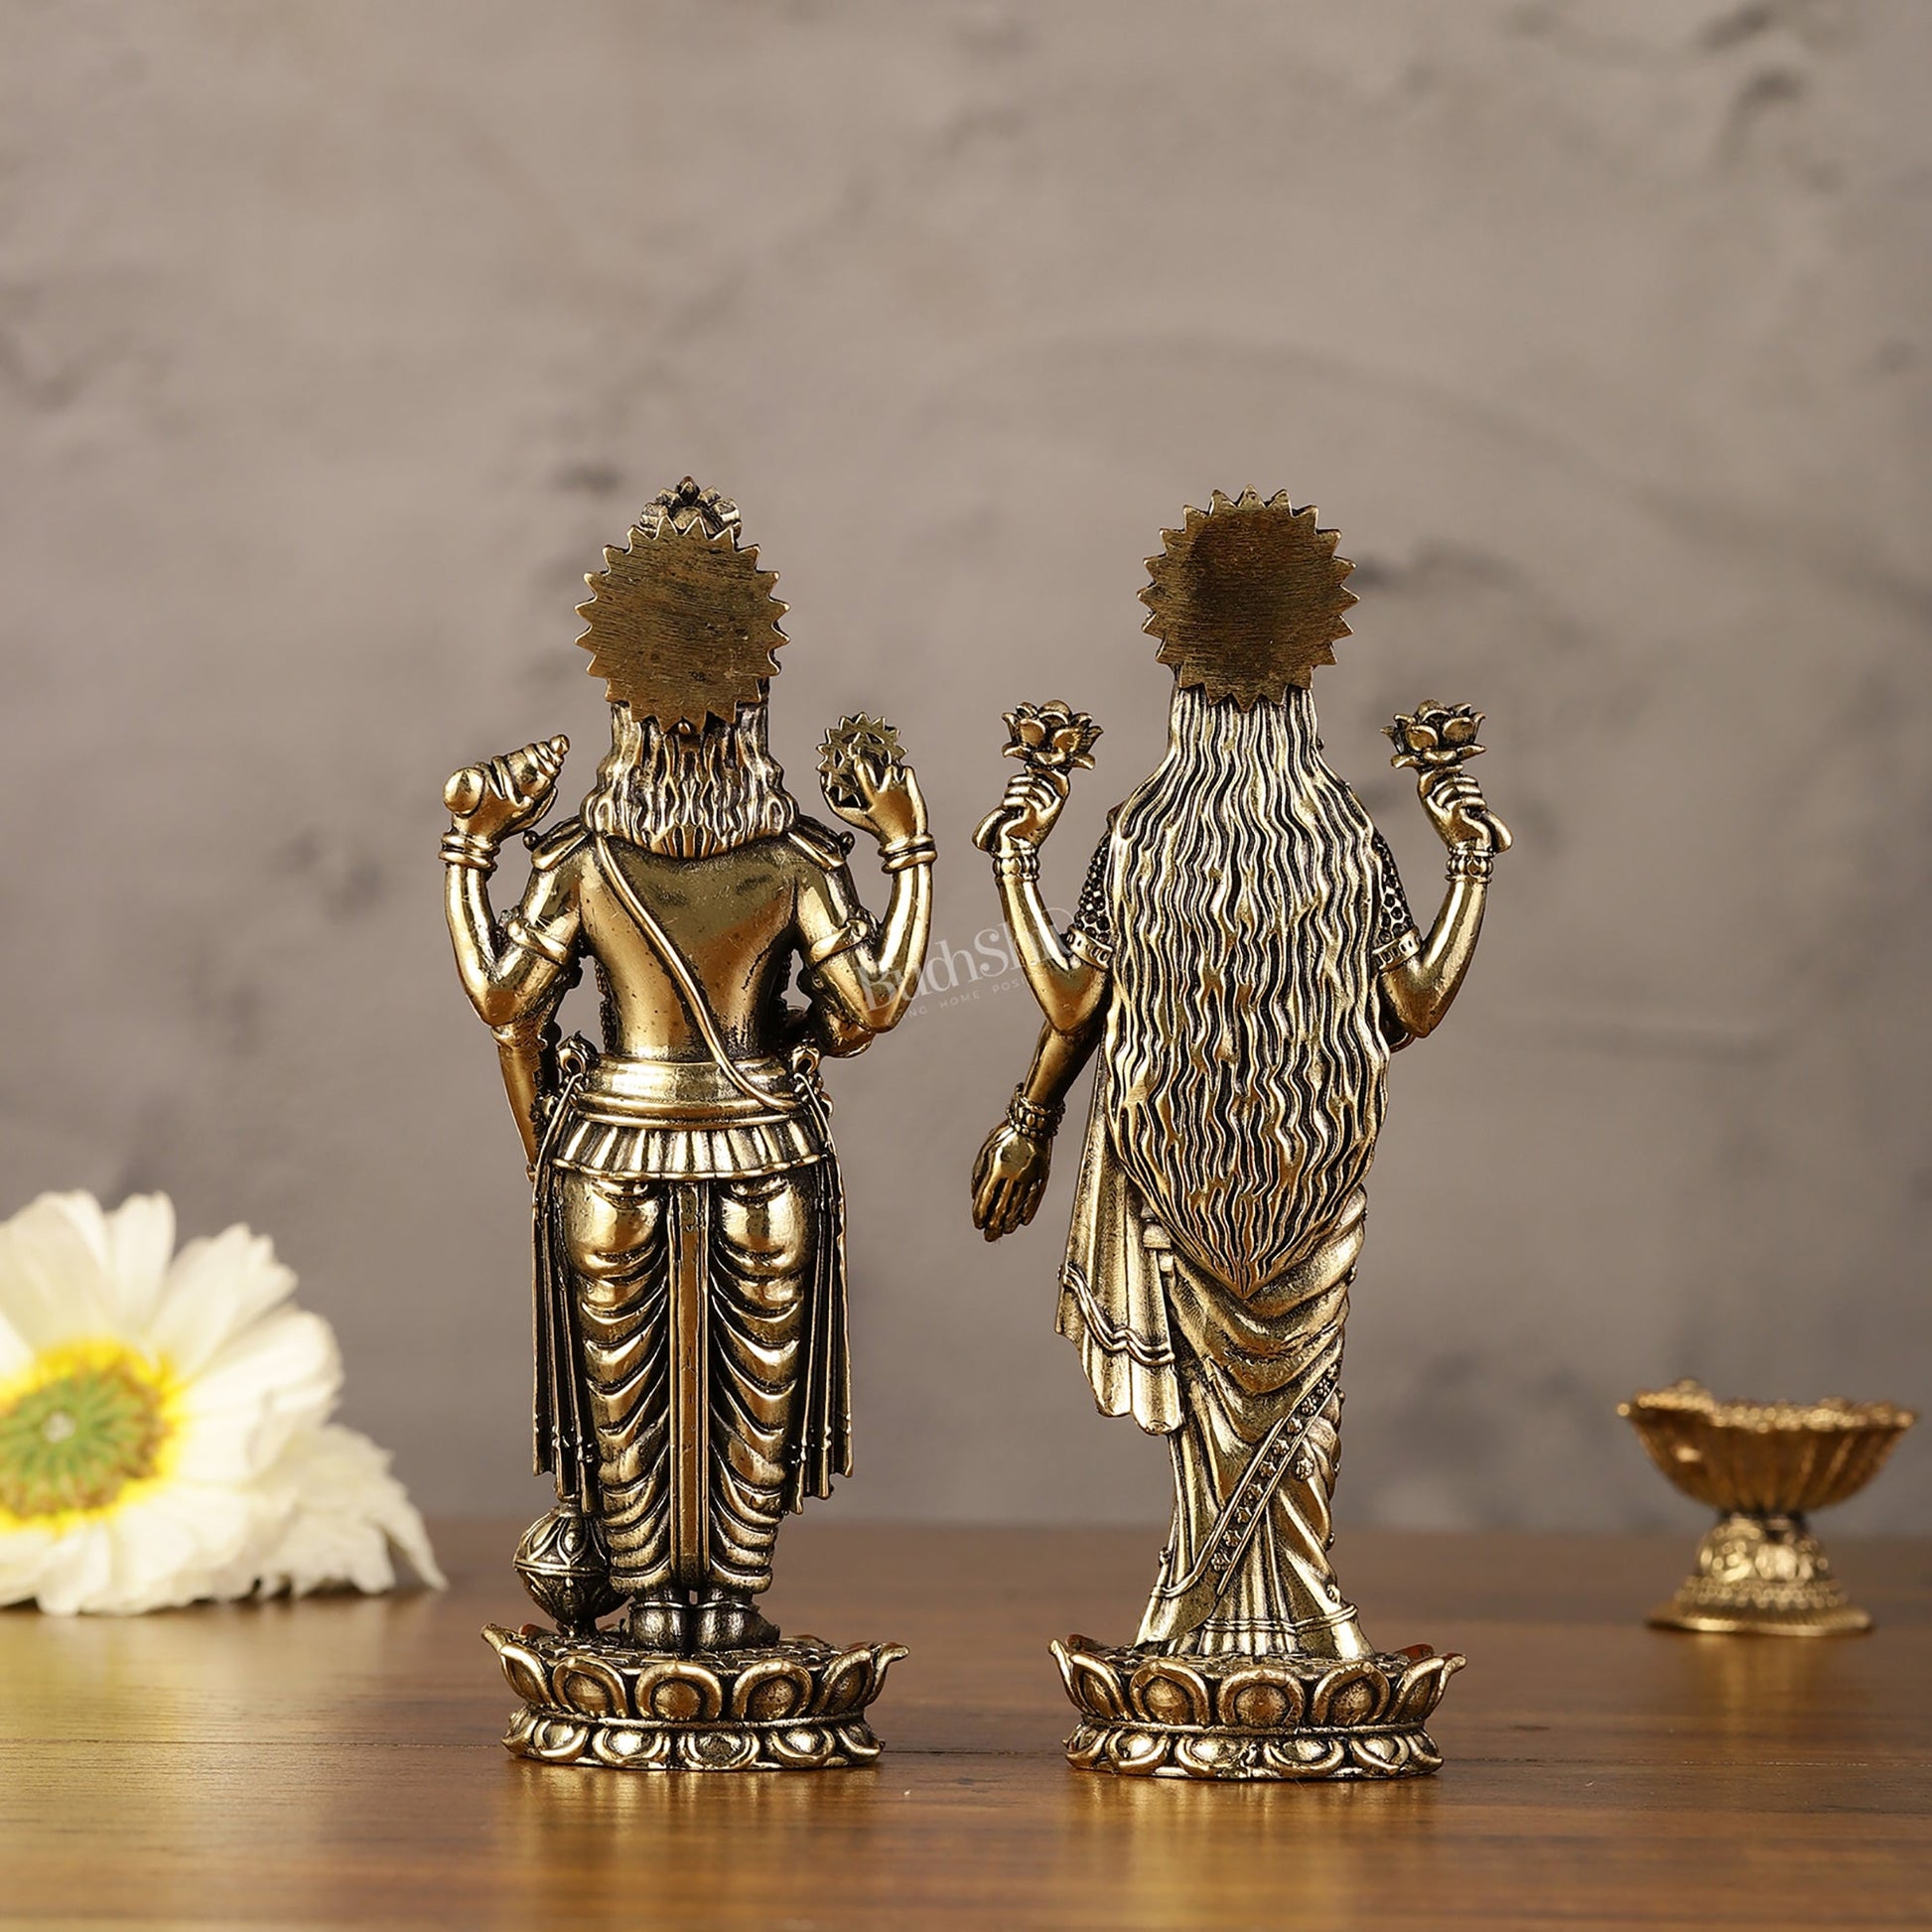 Brass Superfine Intricate Standing Vishnu Lakshmi Narayana Idol - 6" - Budhshiv.com